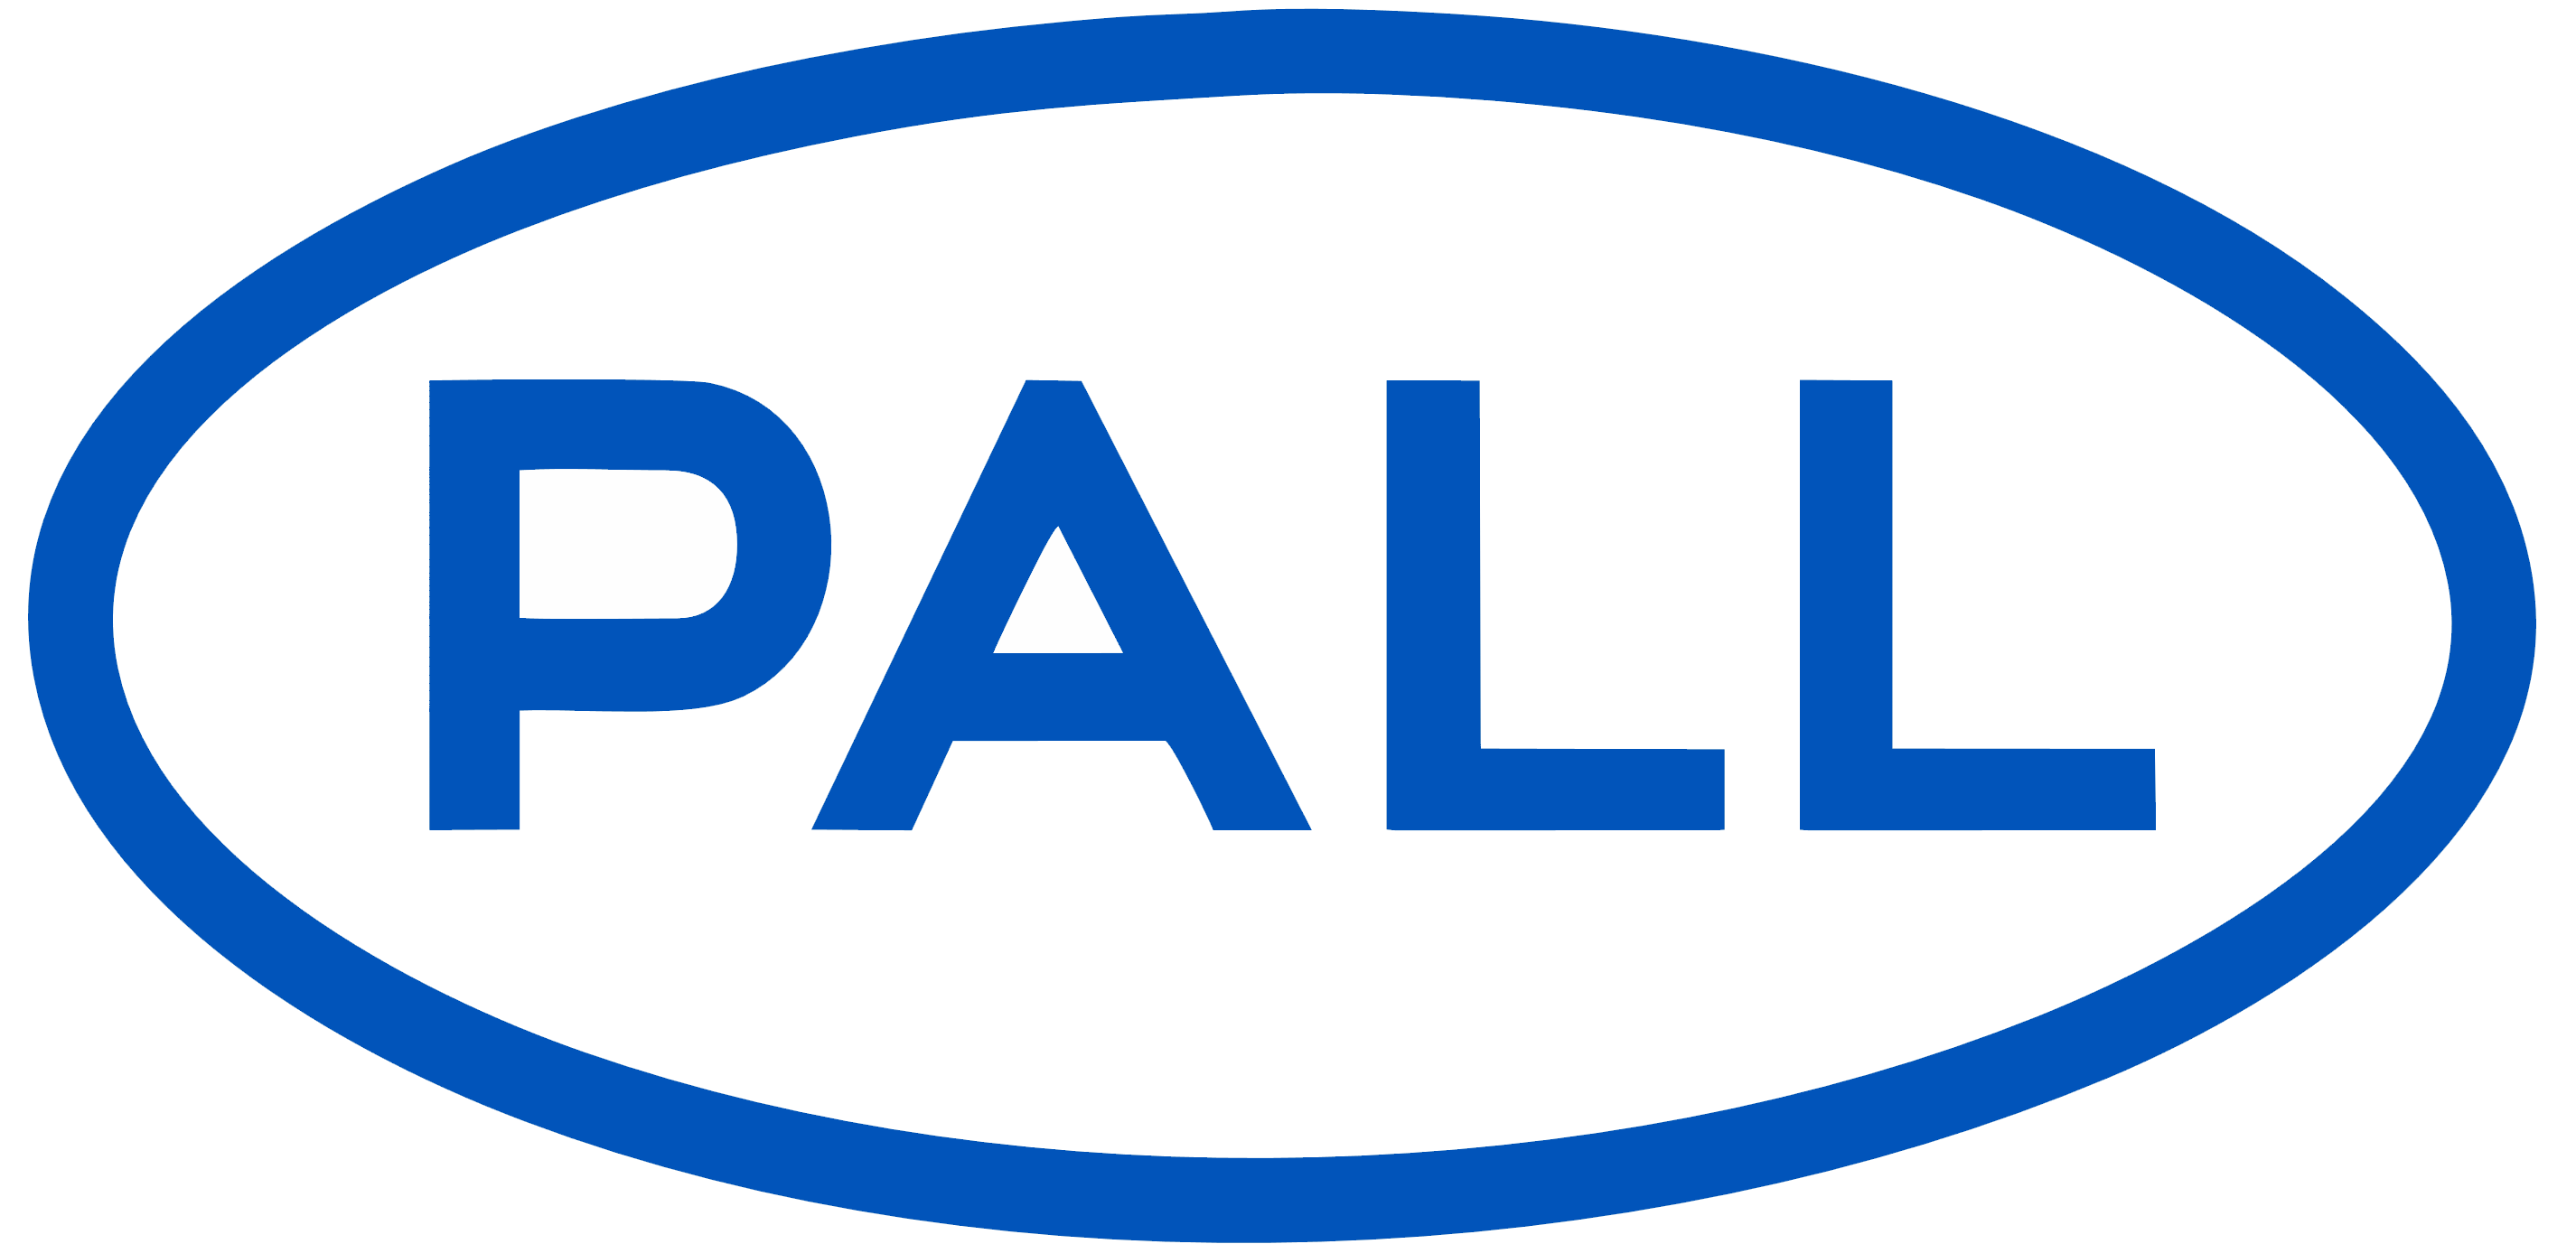 PALL